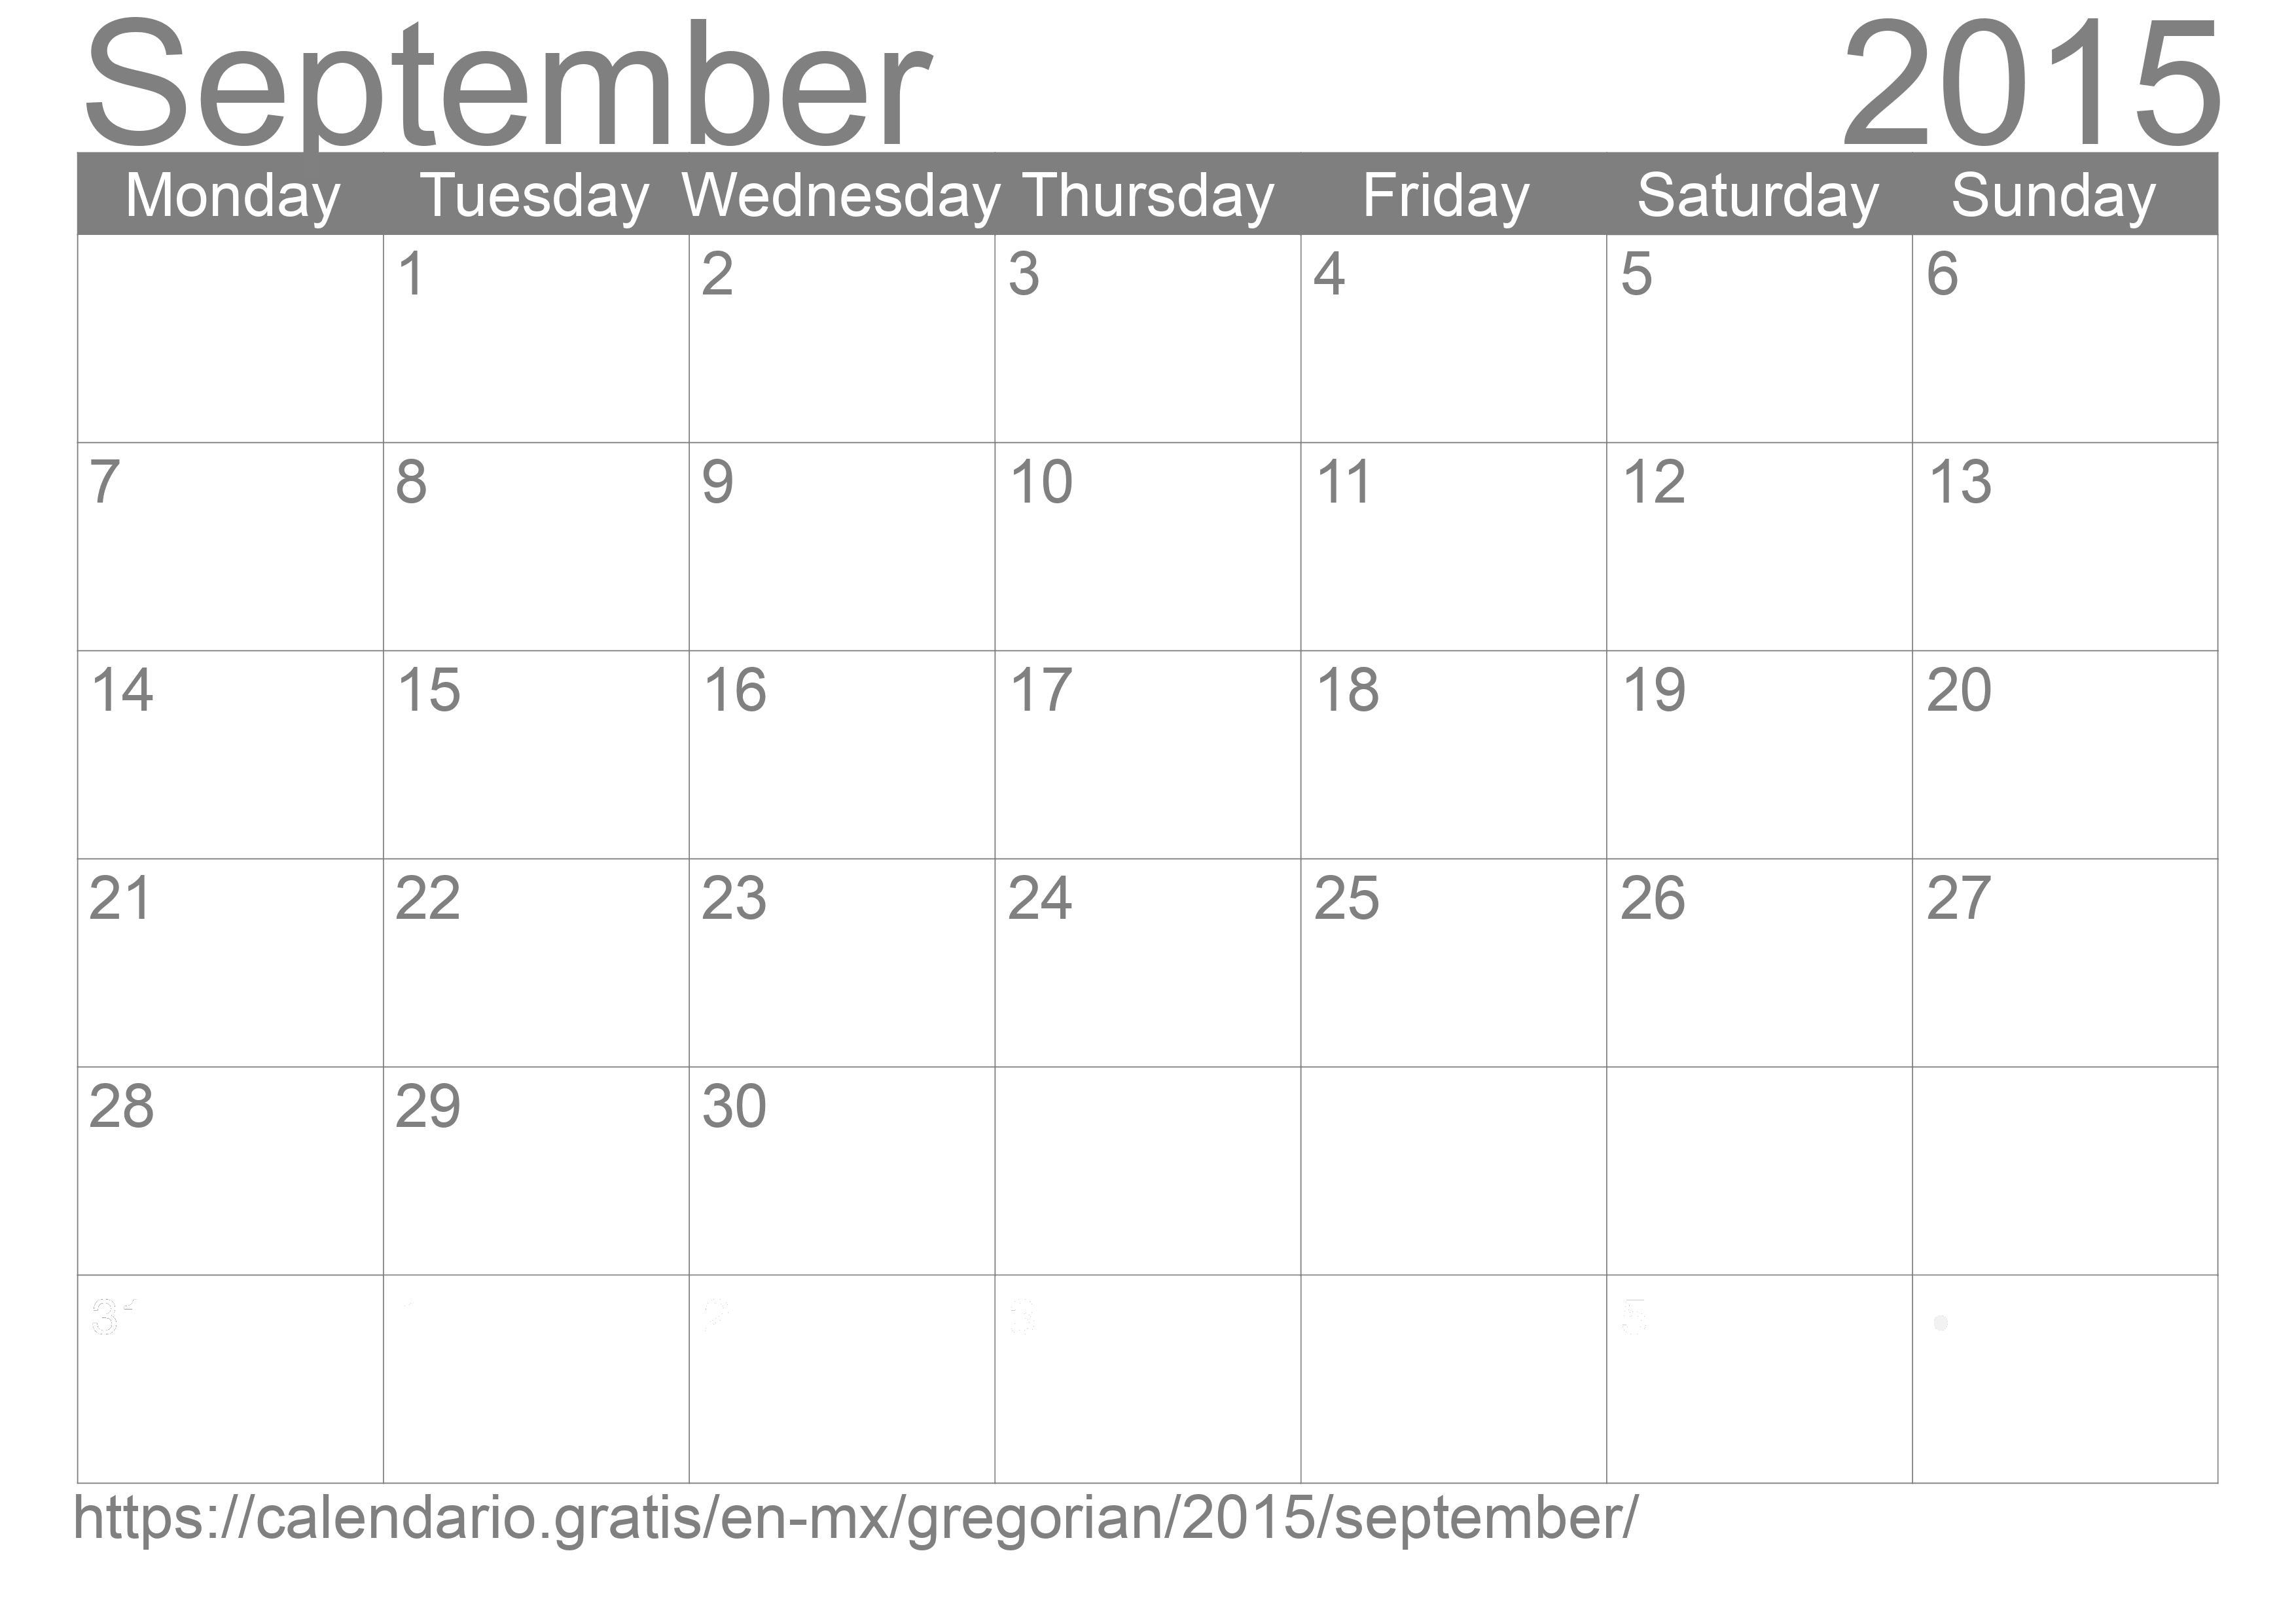 Calendar September 2015 to print